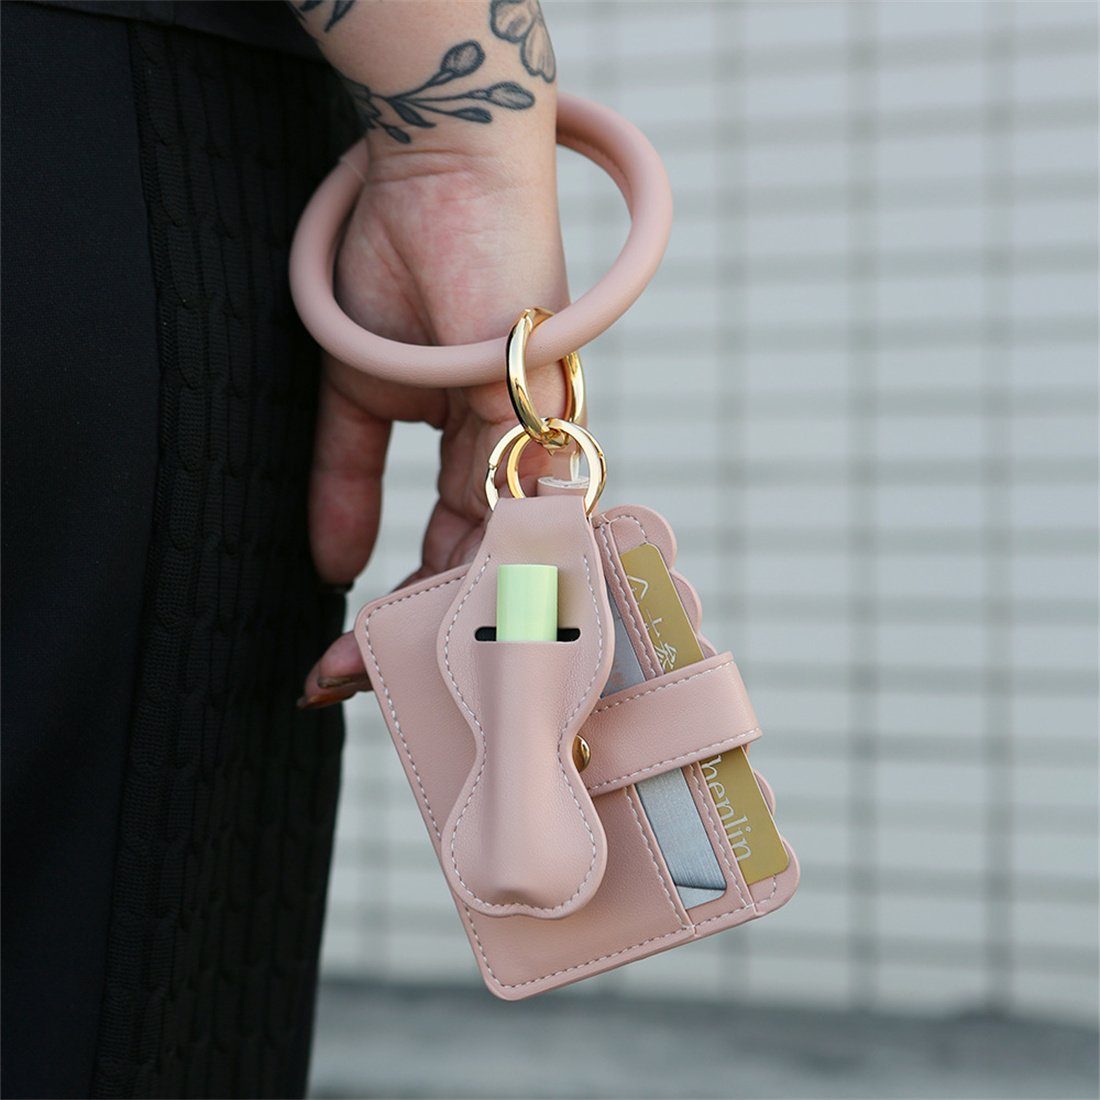 Schlüsselanhänger Armband Rosa DÖRÖY Quaste, Schlüsselanhänger Kunstleder mit Schlüsselanhänger